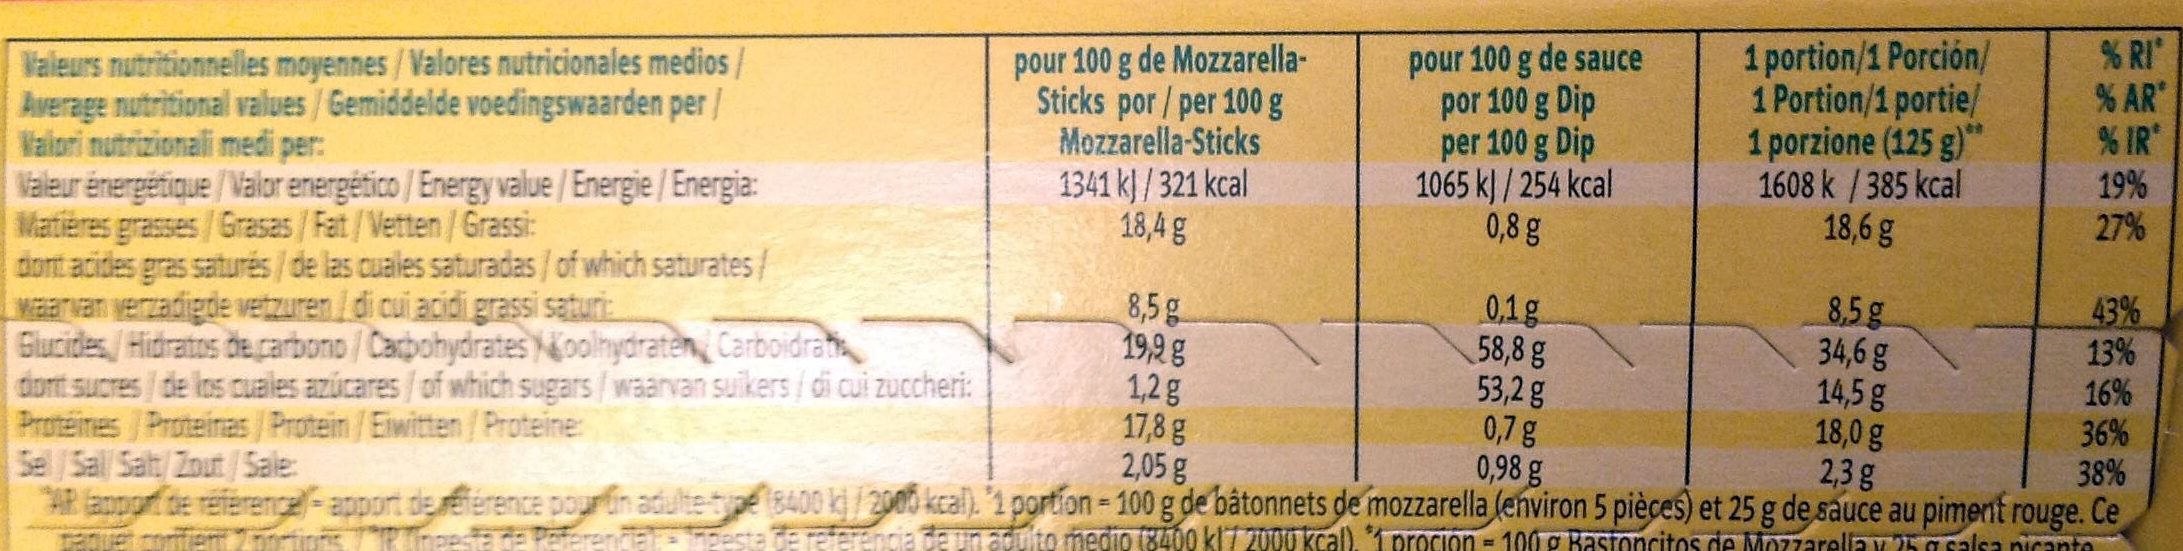 Mozzarella Sticks - Nutrition facts - fr